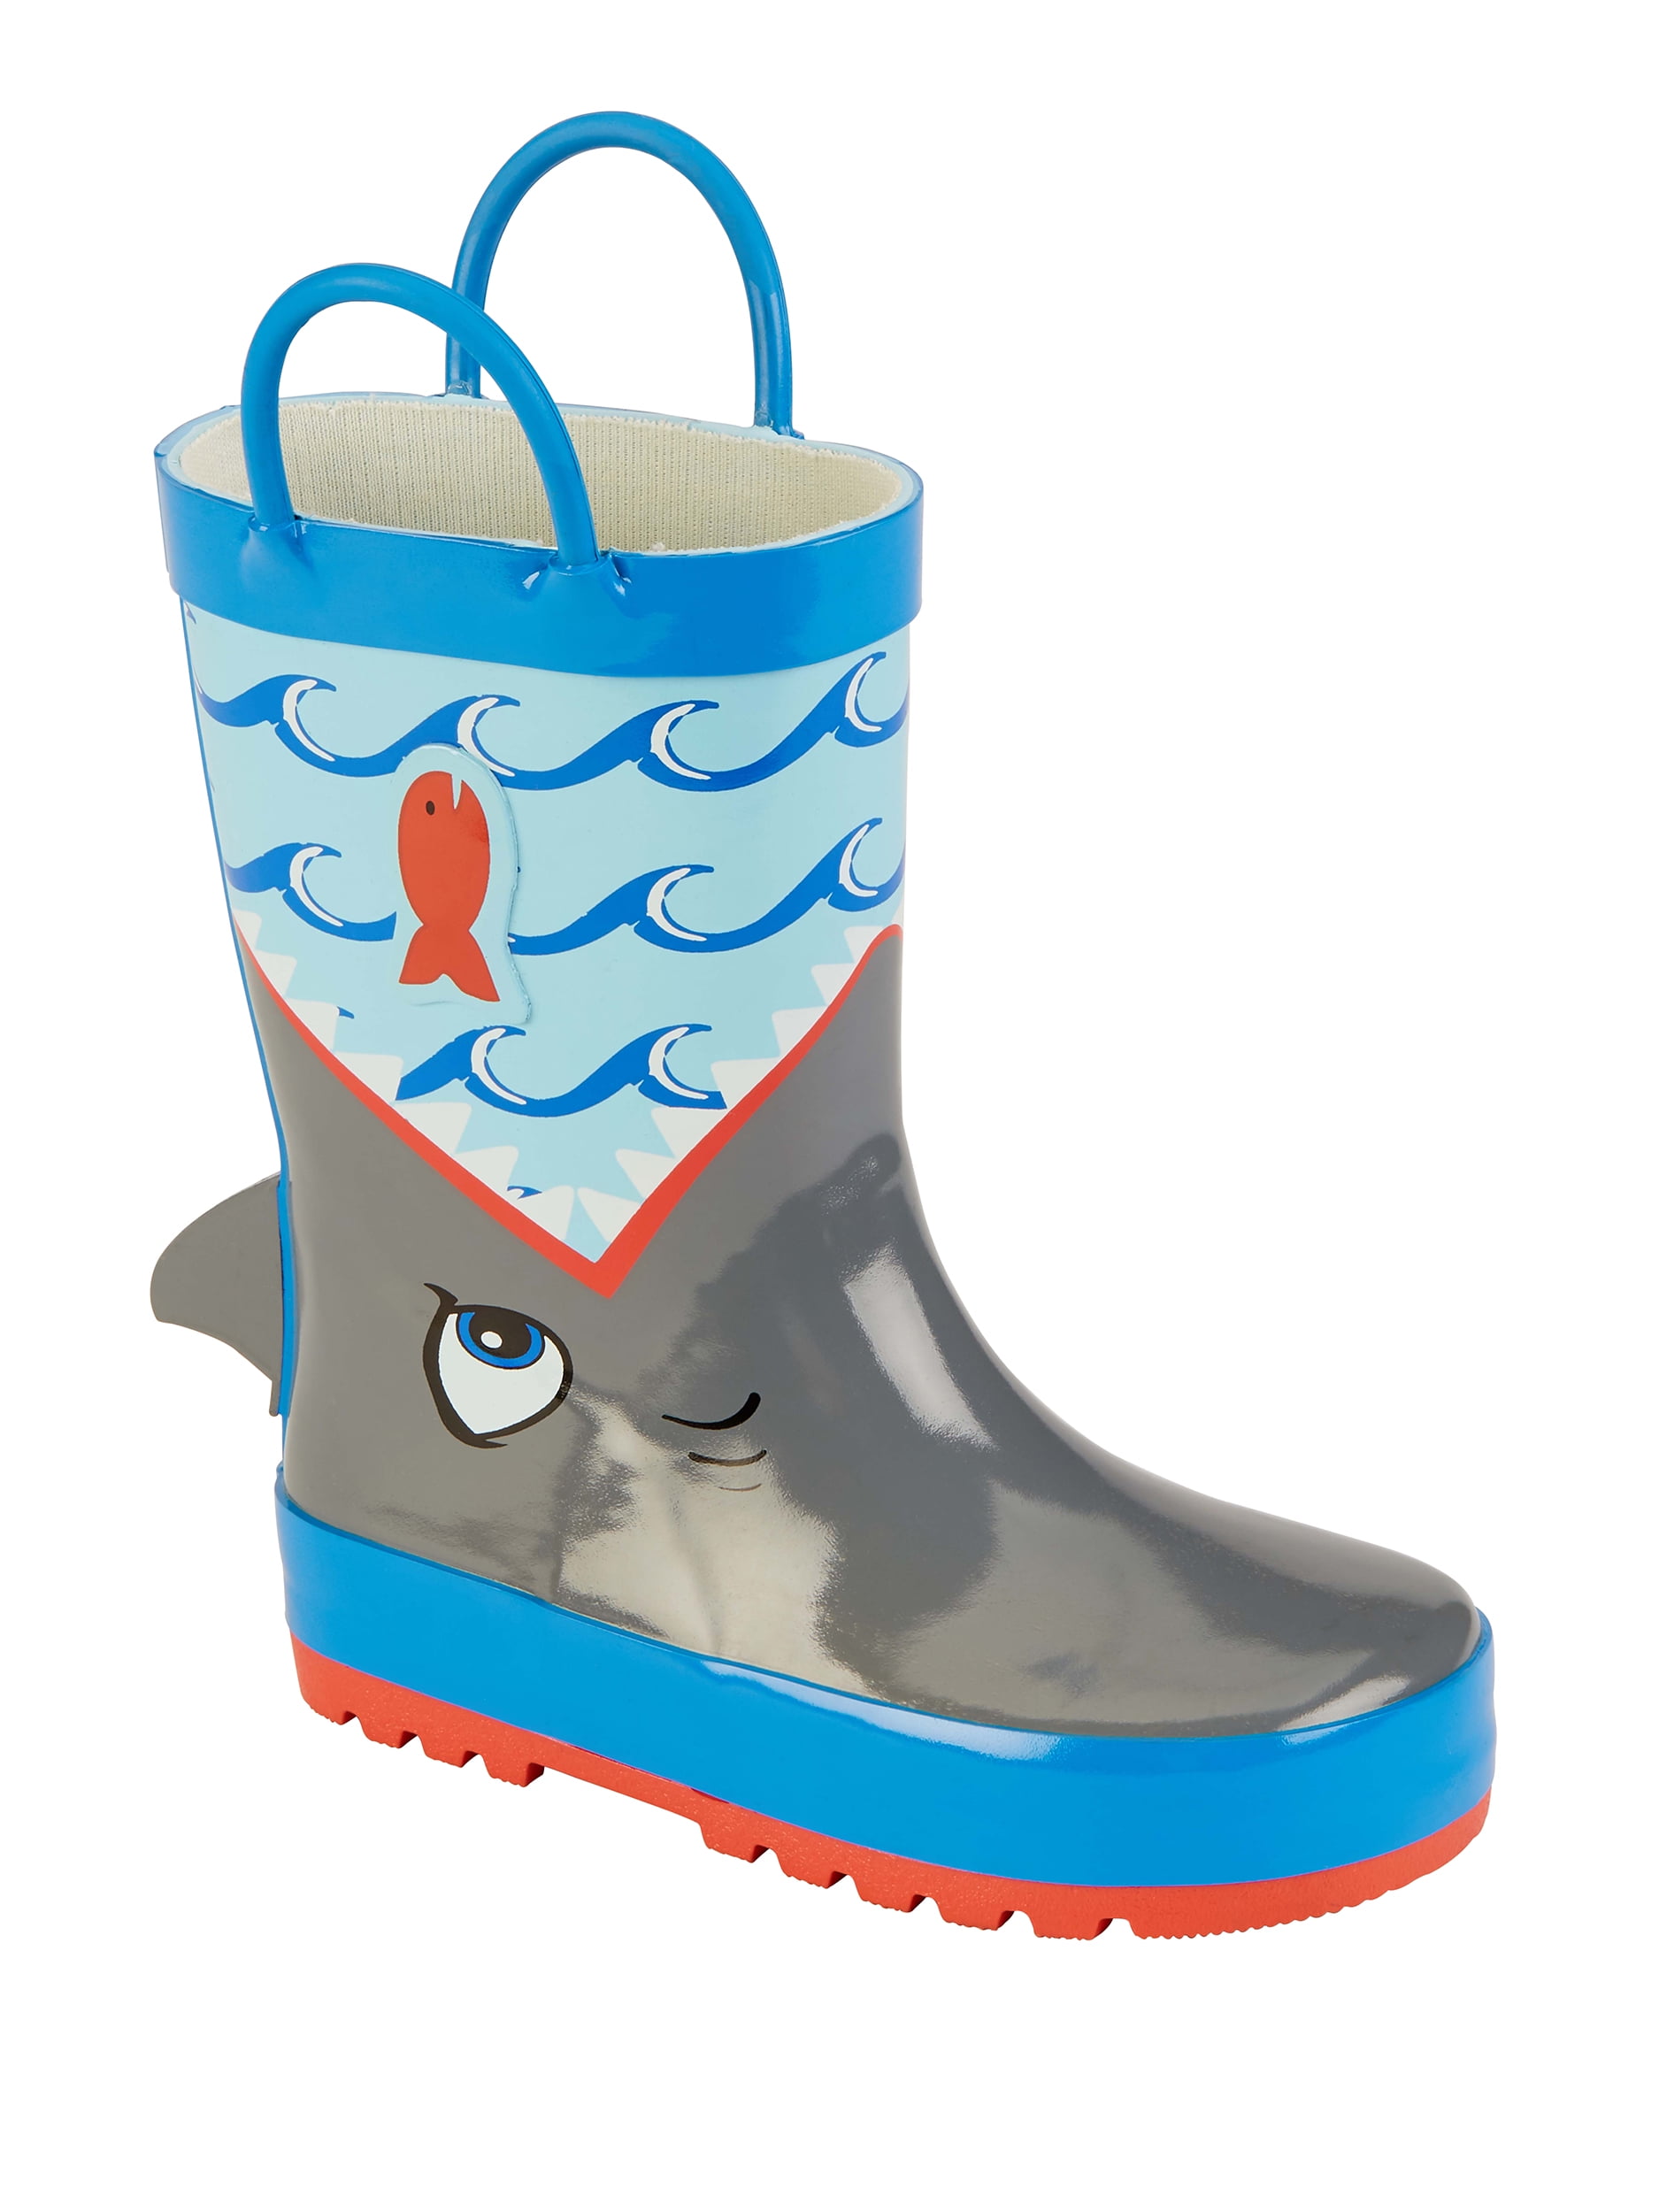 Boys Toddlers Kids Wellies Rain Boots Waterproof Wellington Warmers Sizes 9-12 